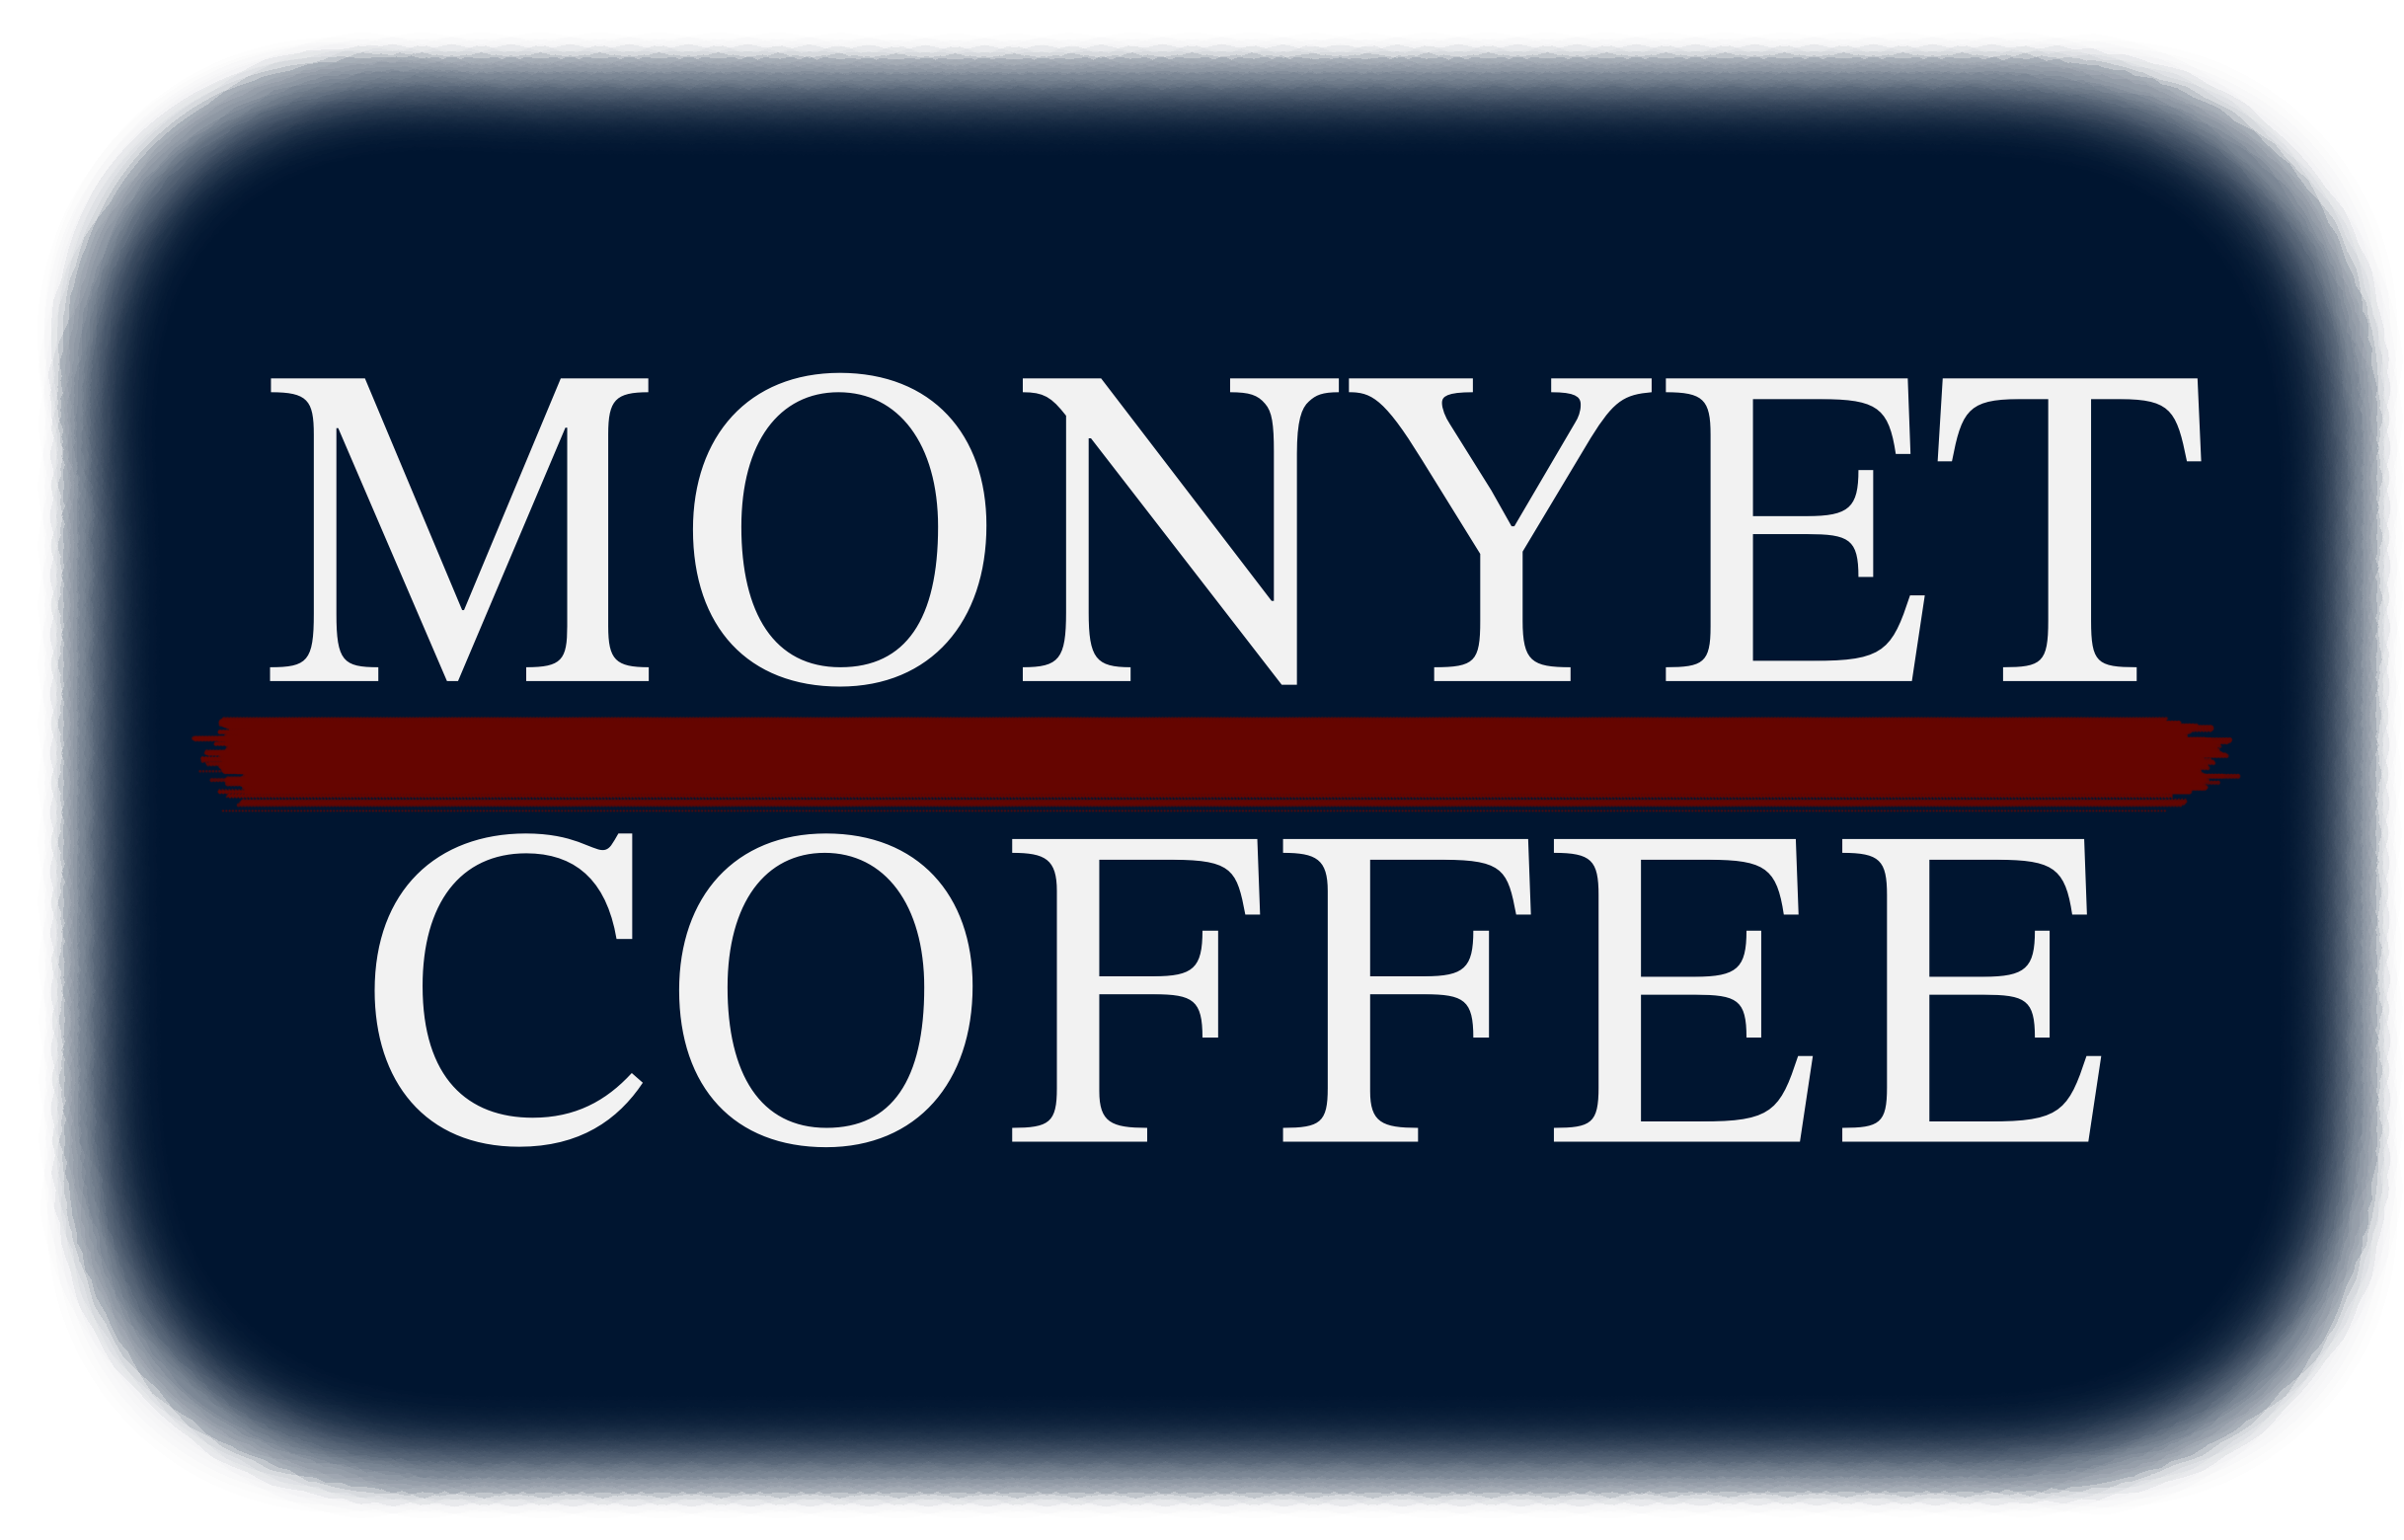 Monyet Coffee